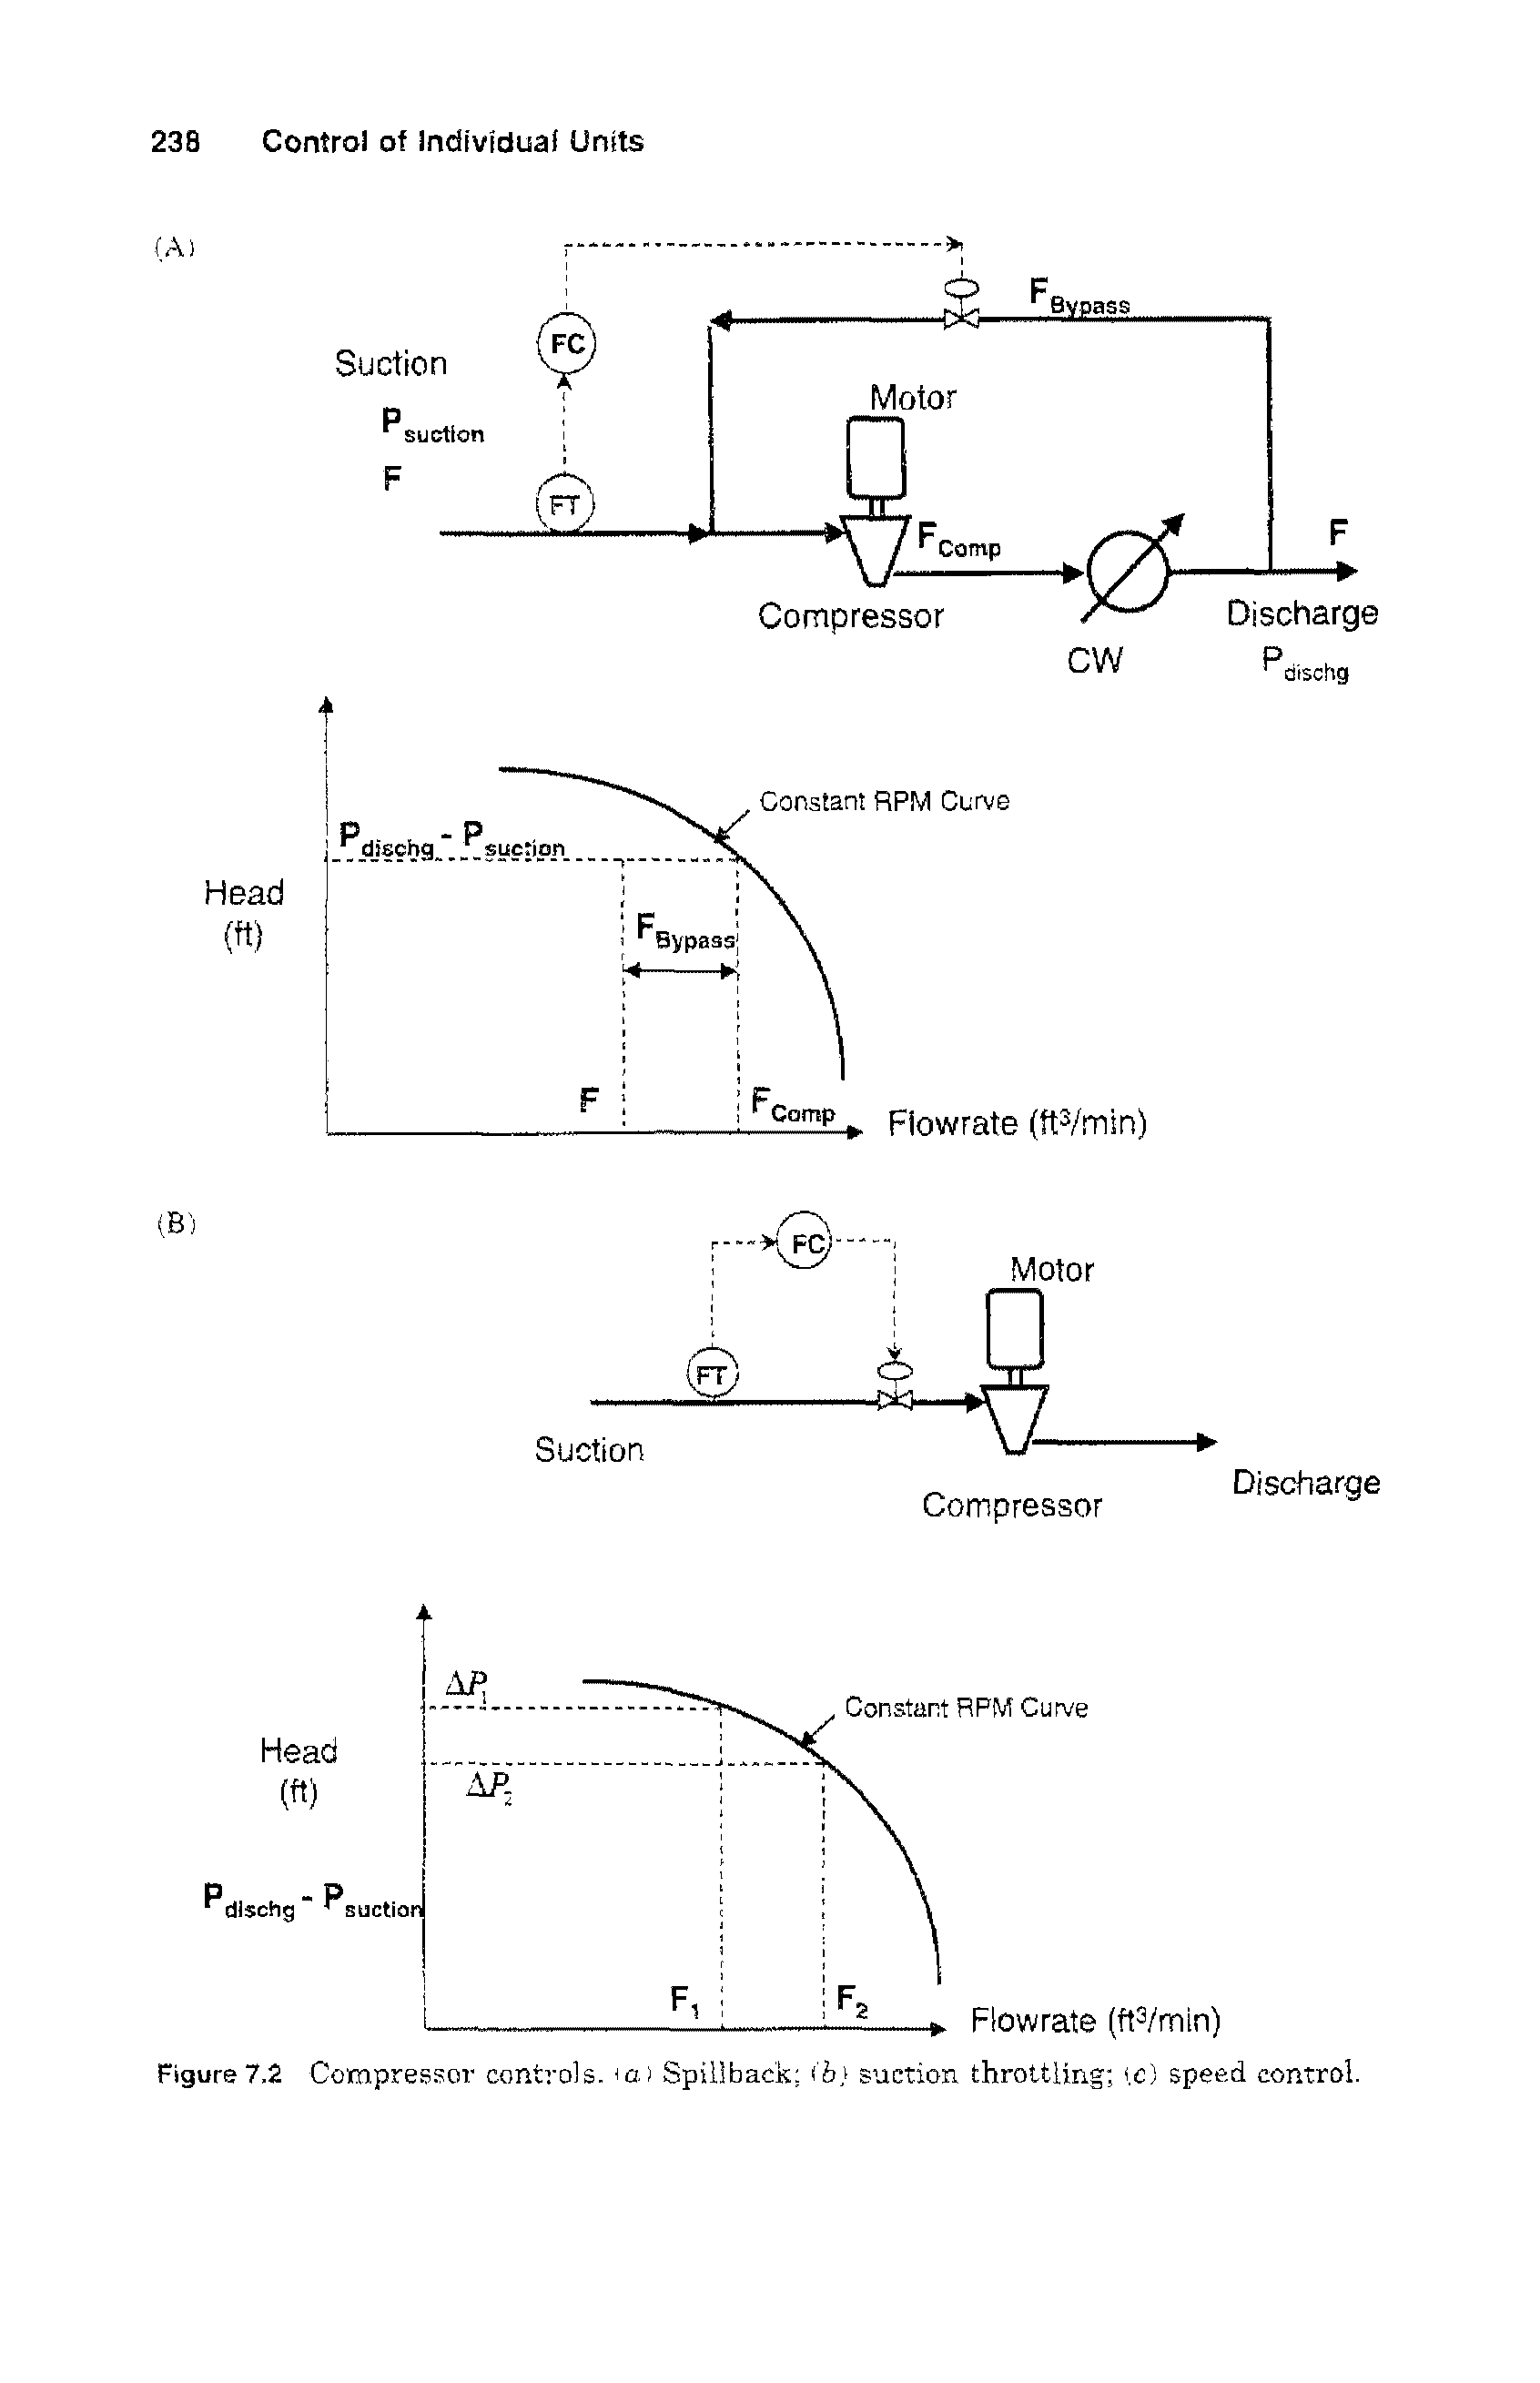 Figure 7.2 Compressor controls. <a) Spillback suction throttling i.c) speed control.